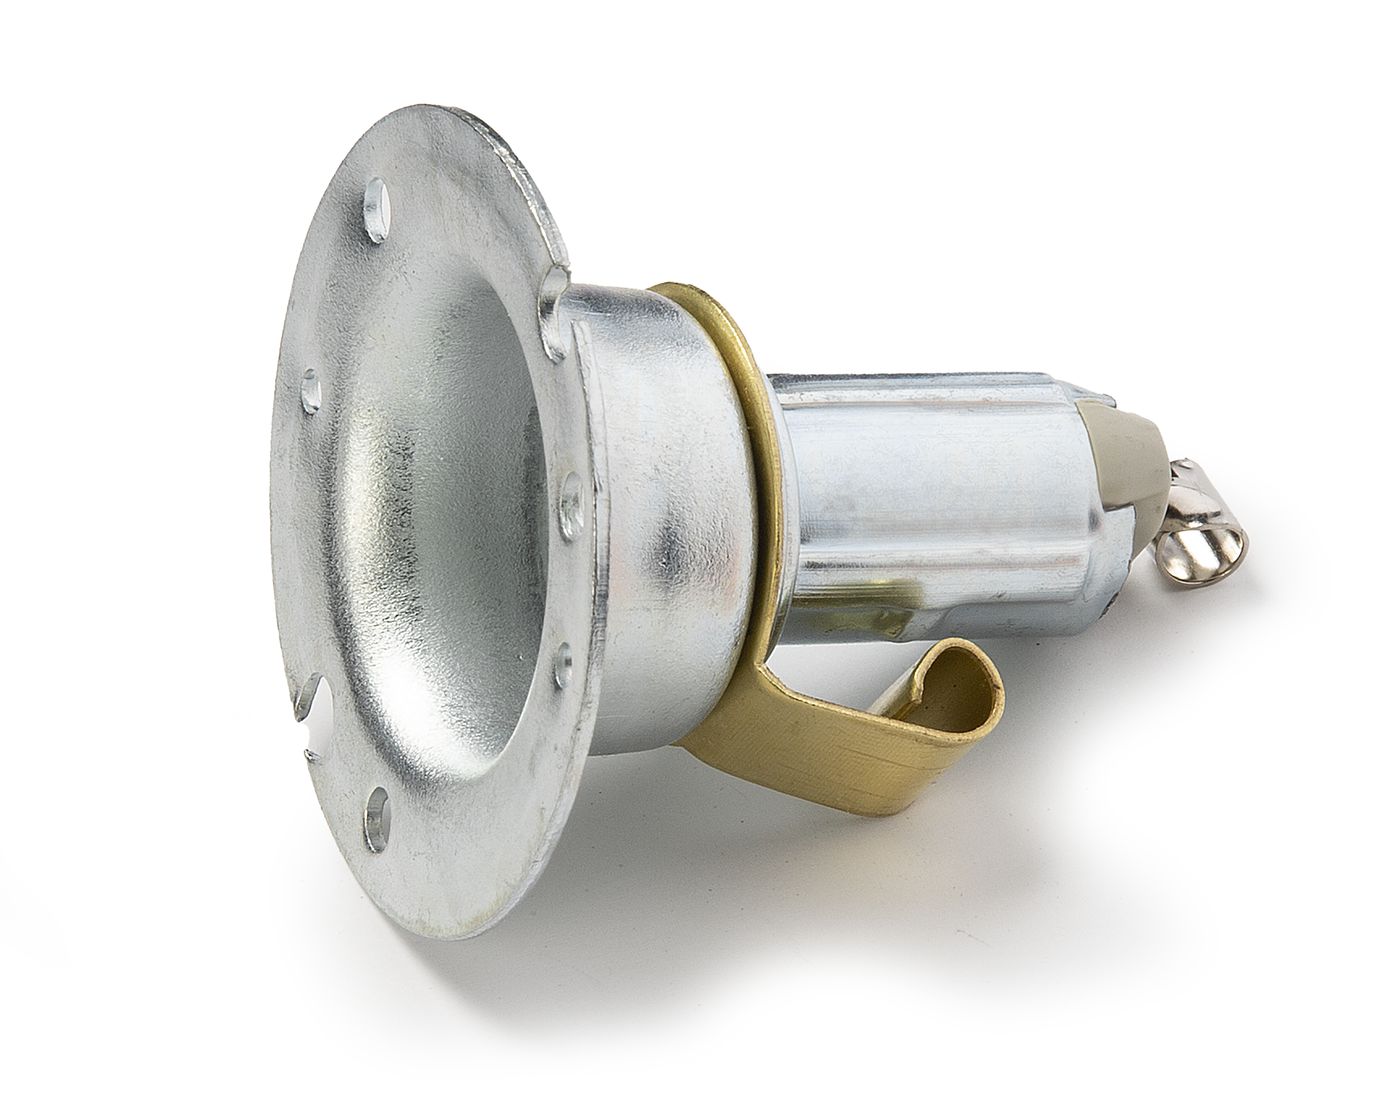 Glühbirnensockel
Bulb holder
Socle d'ampoule
Basa de bombilla
B